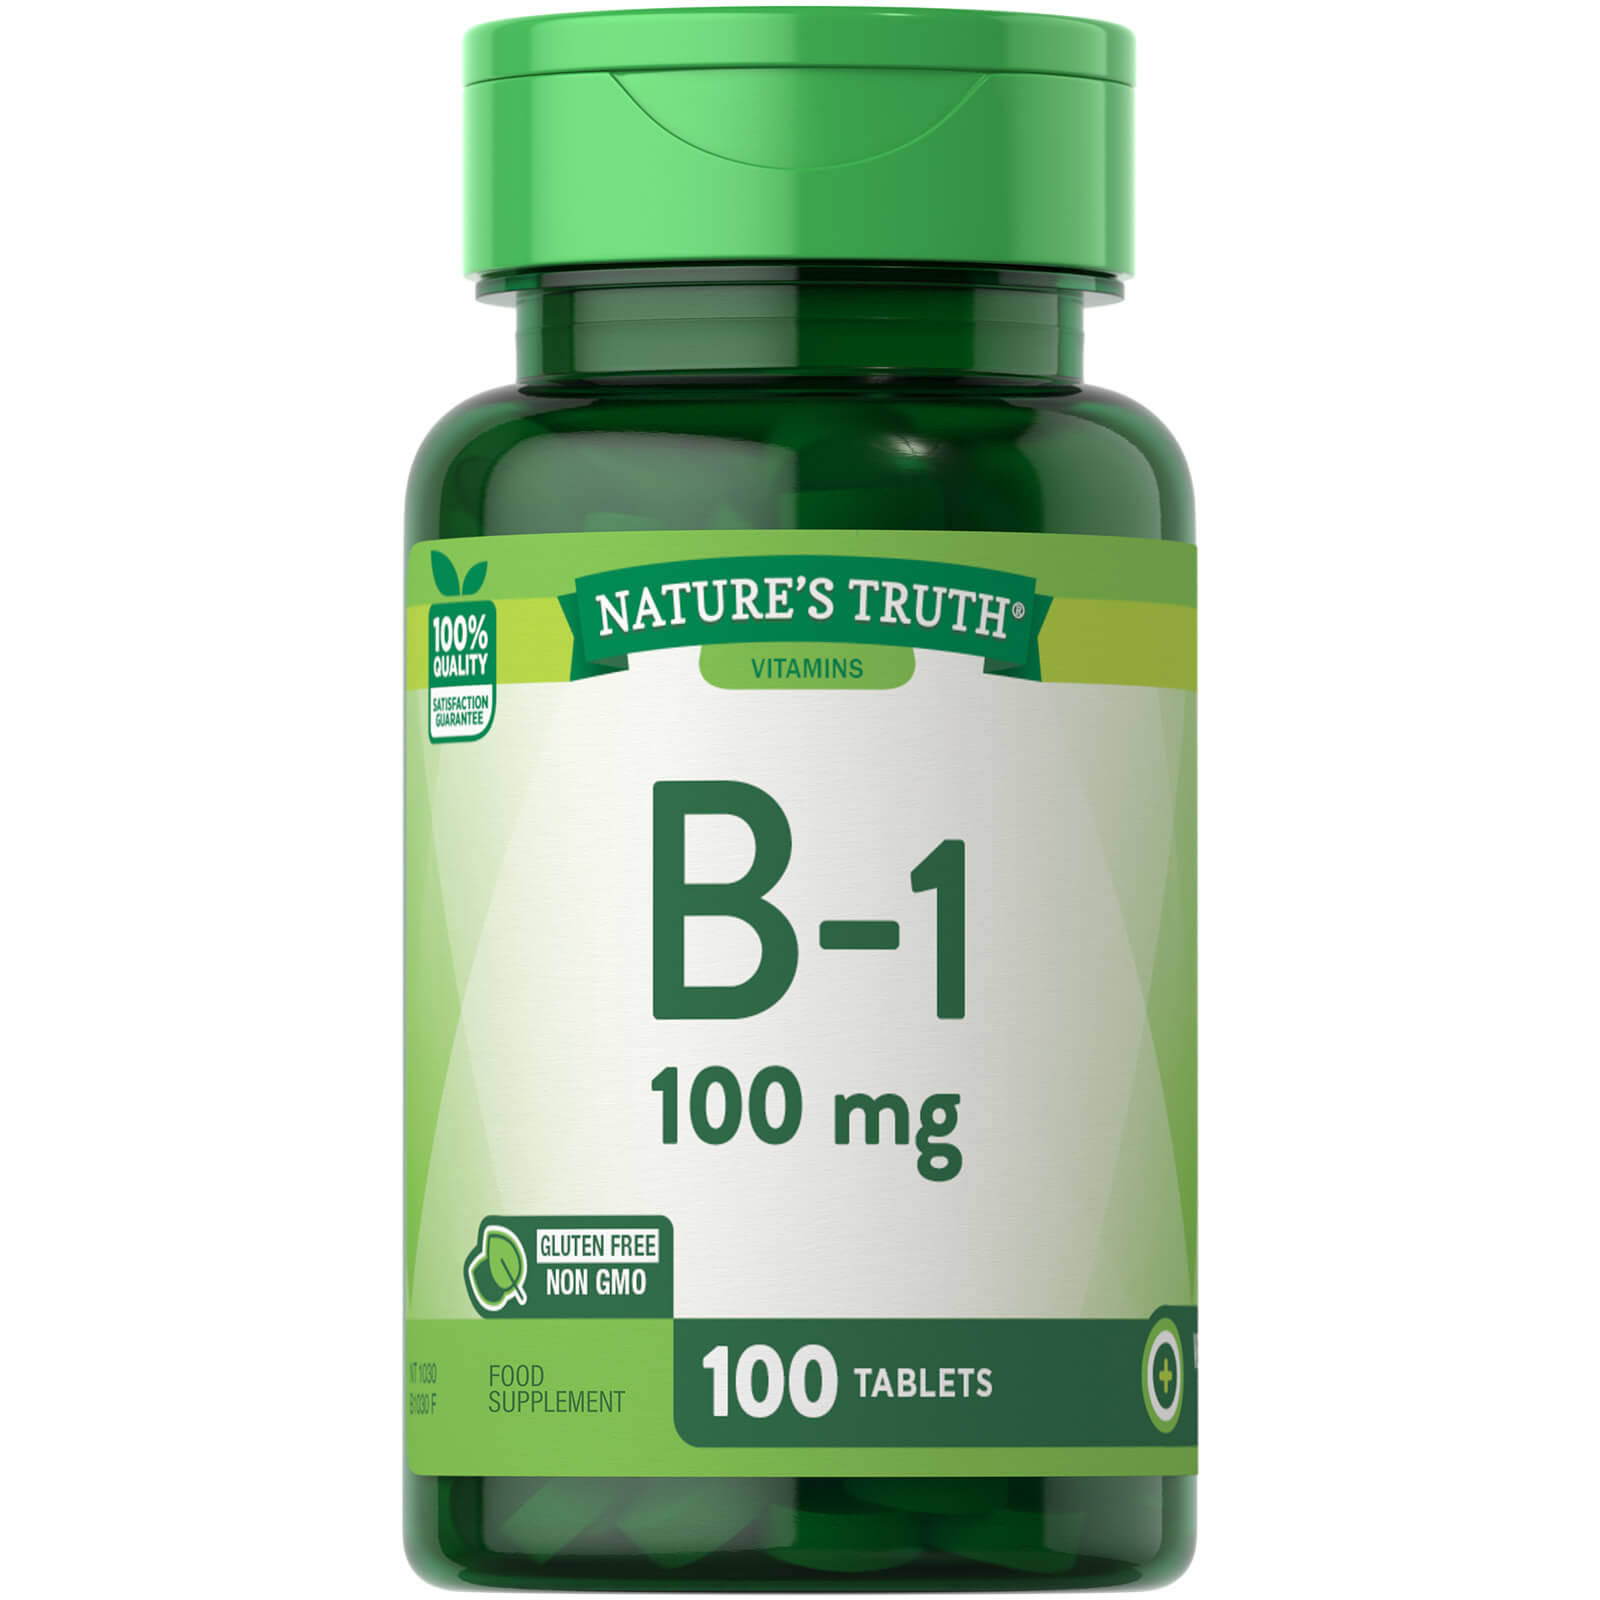 Nature's Truth Vitamin B-1 100mg Tablets - x100